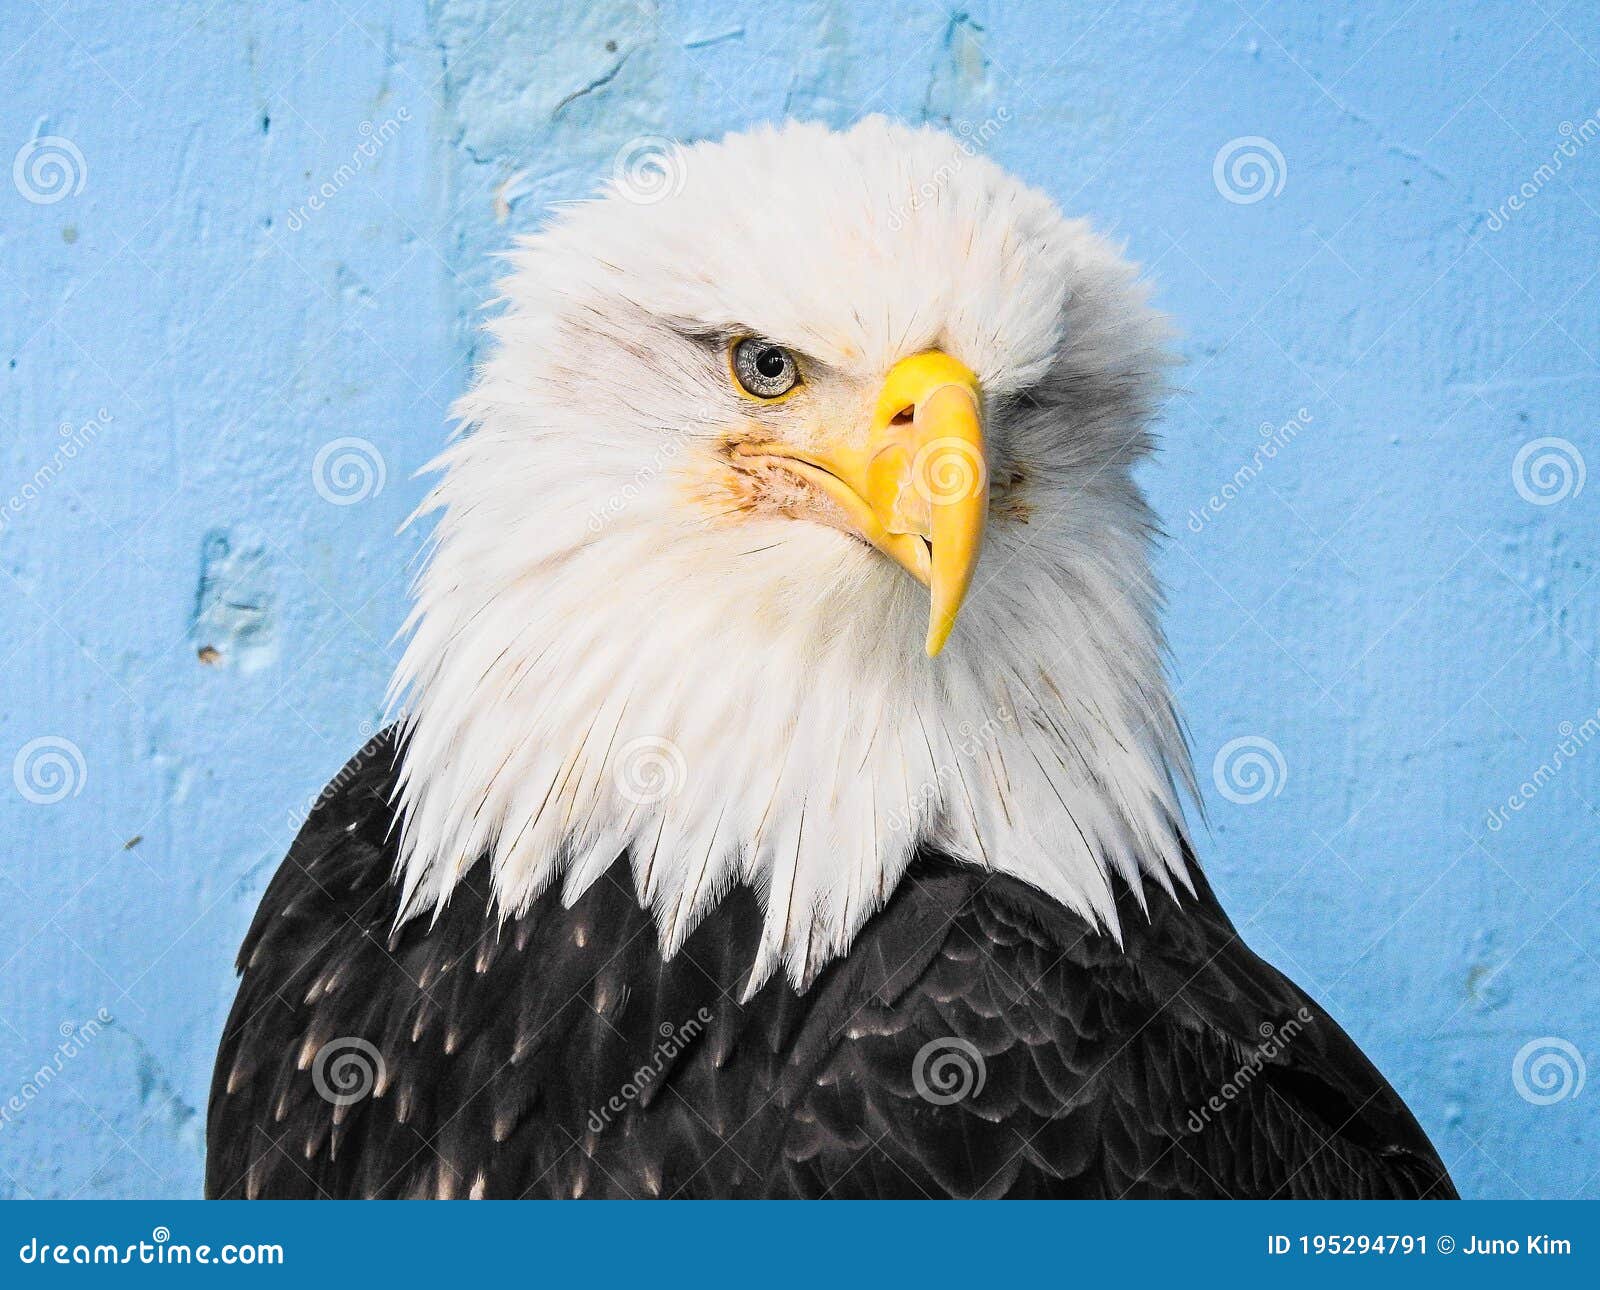 a bald eagle in alaska